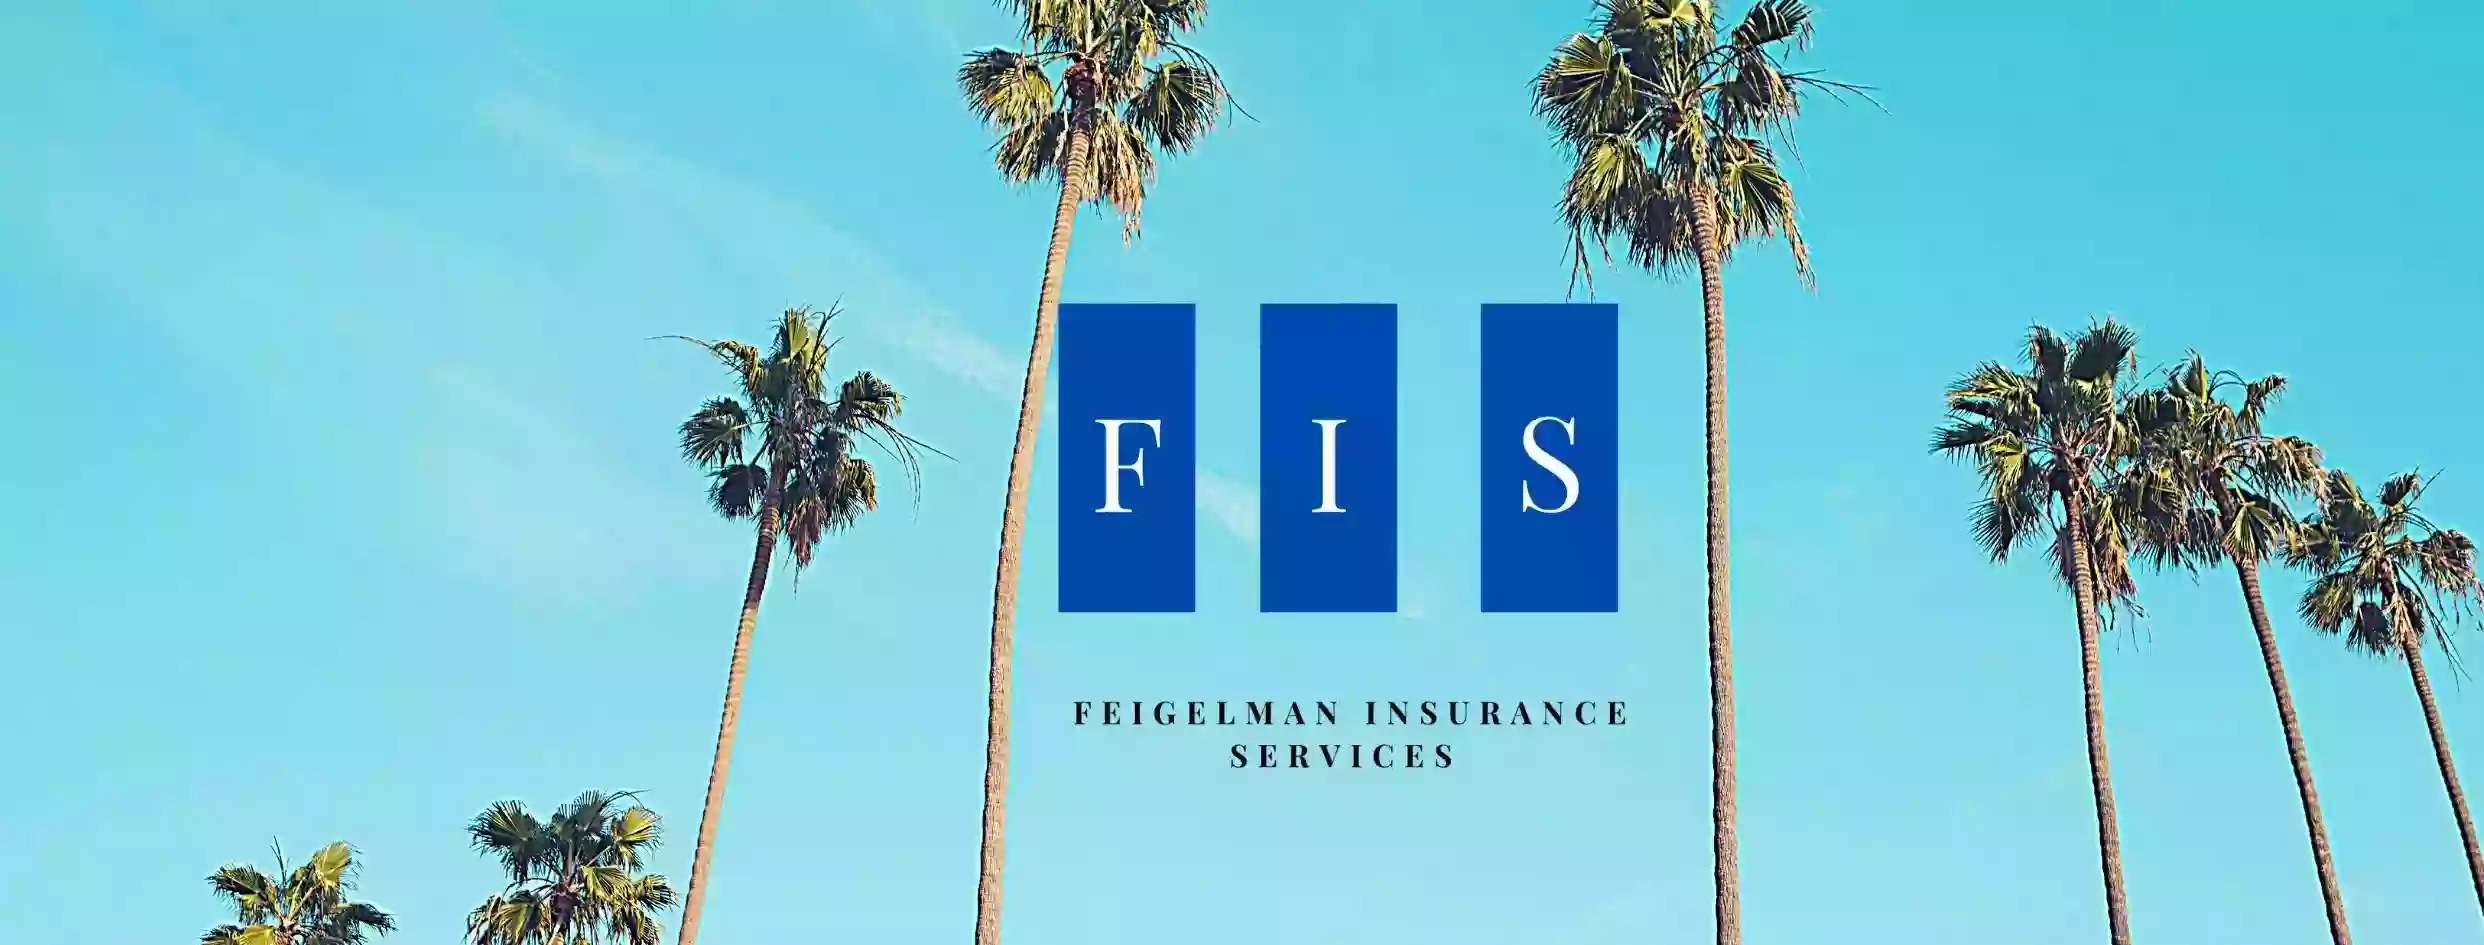 Feigelman Insurance Services